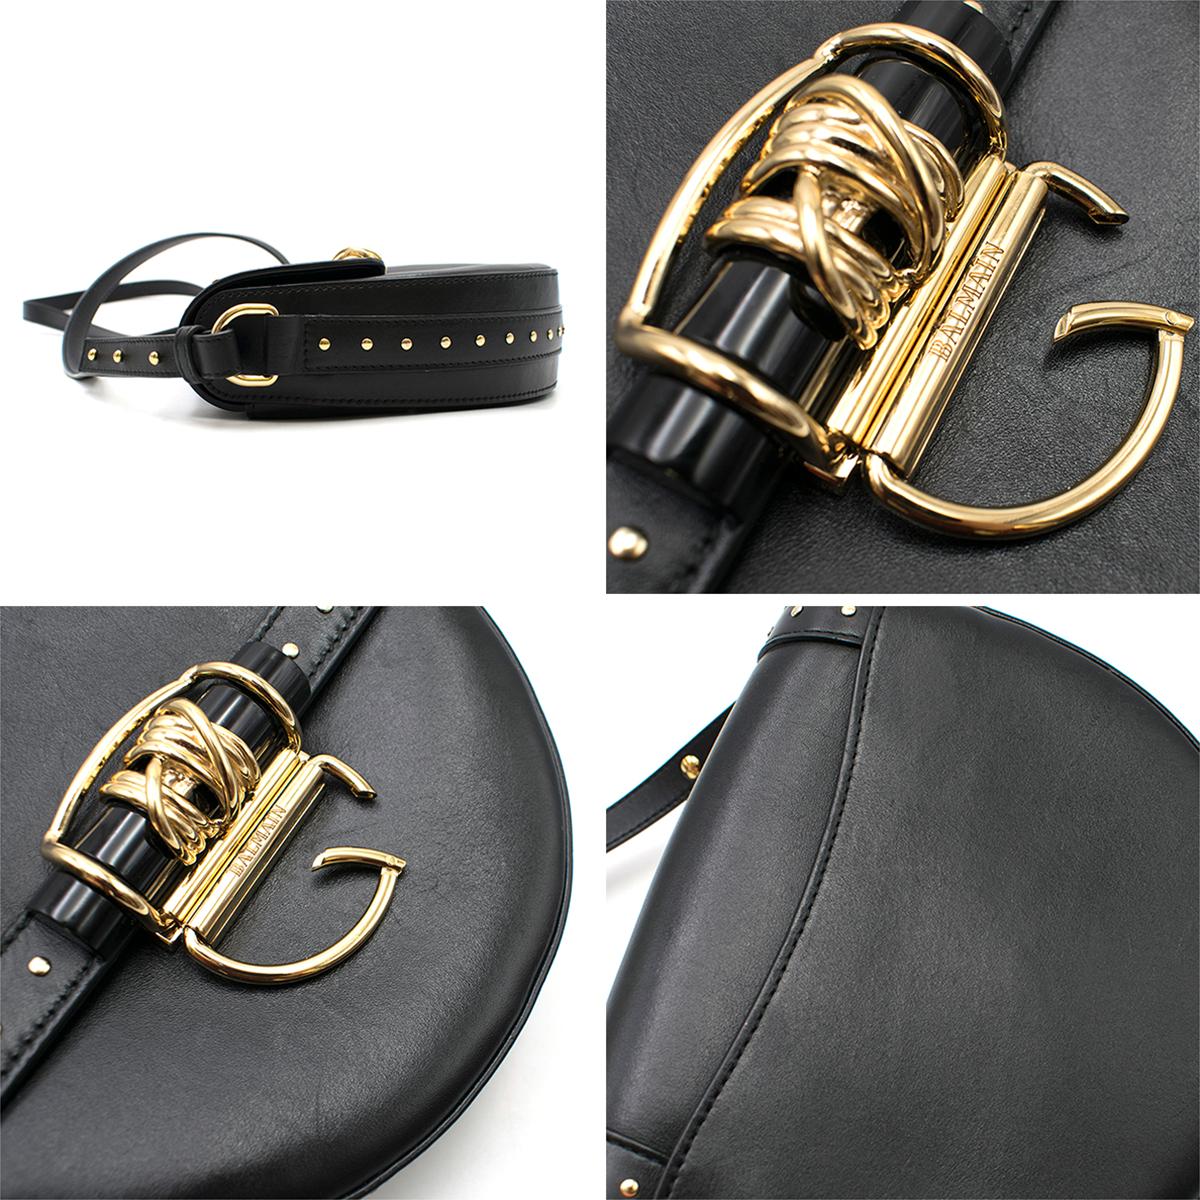 Balmain 44-18 Glove Black Leather Crossbody Bag w/Studs For Sale 1